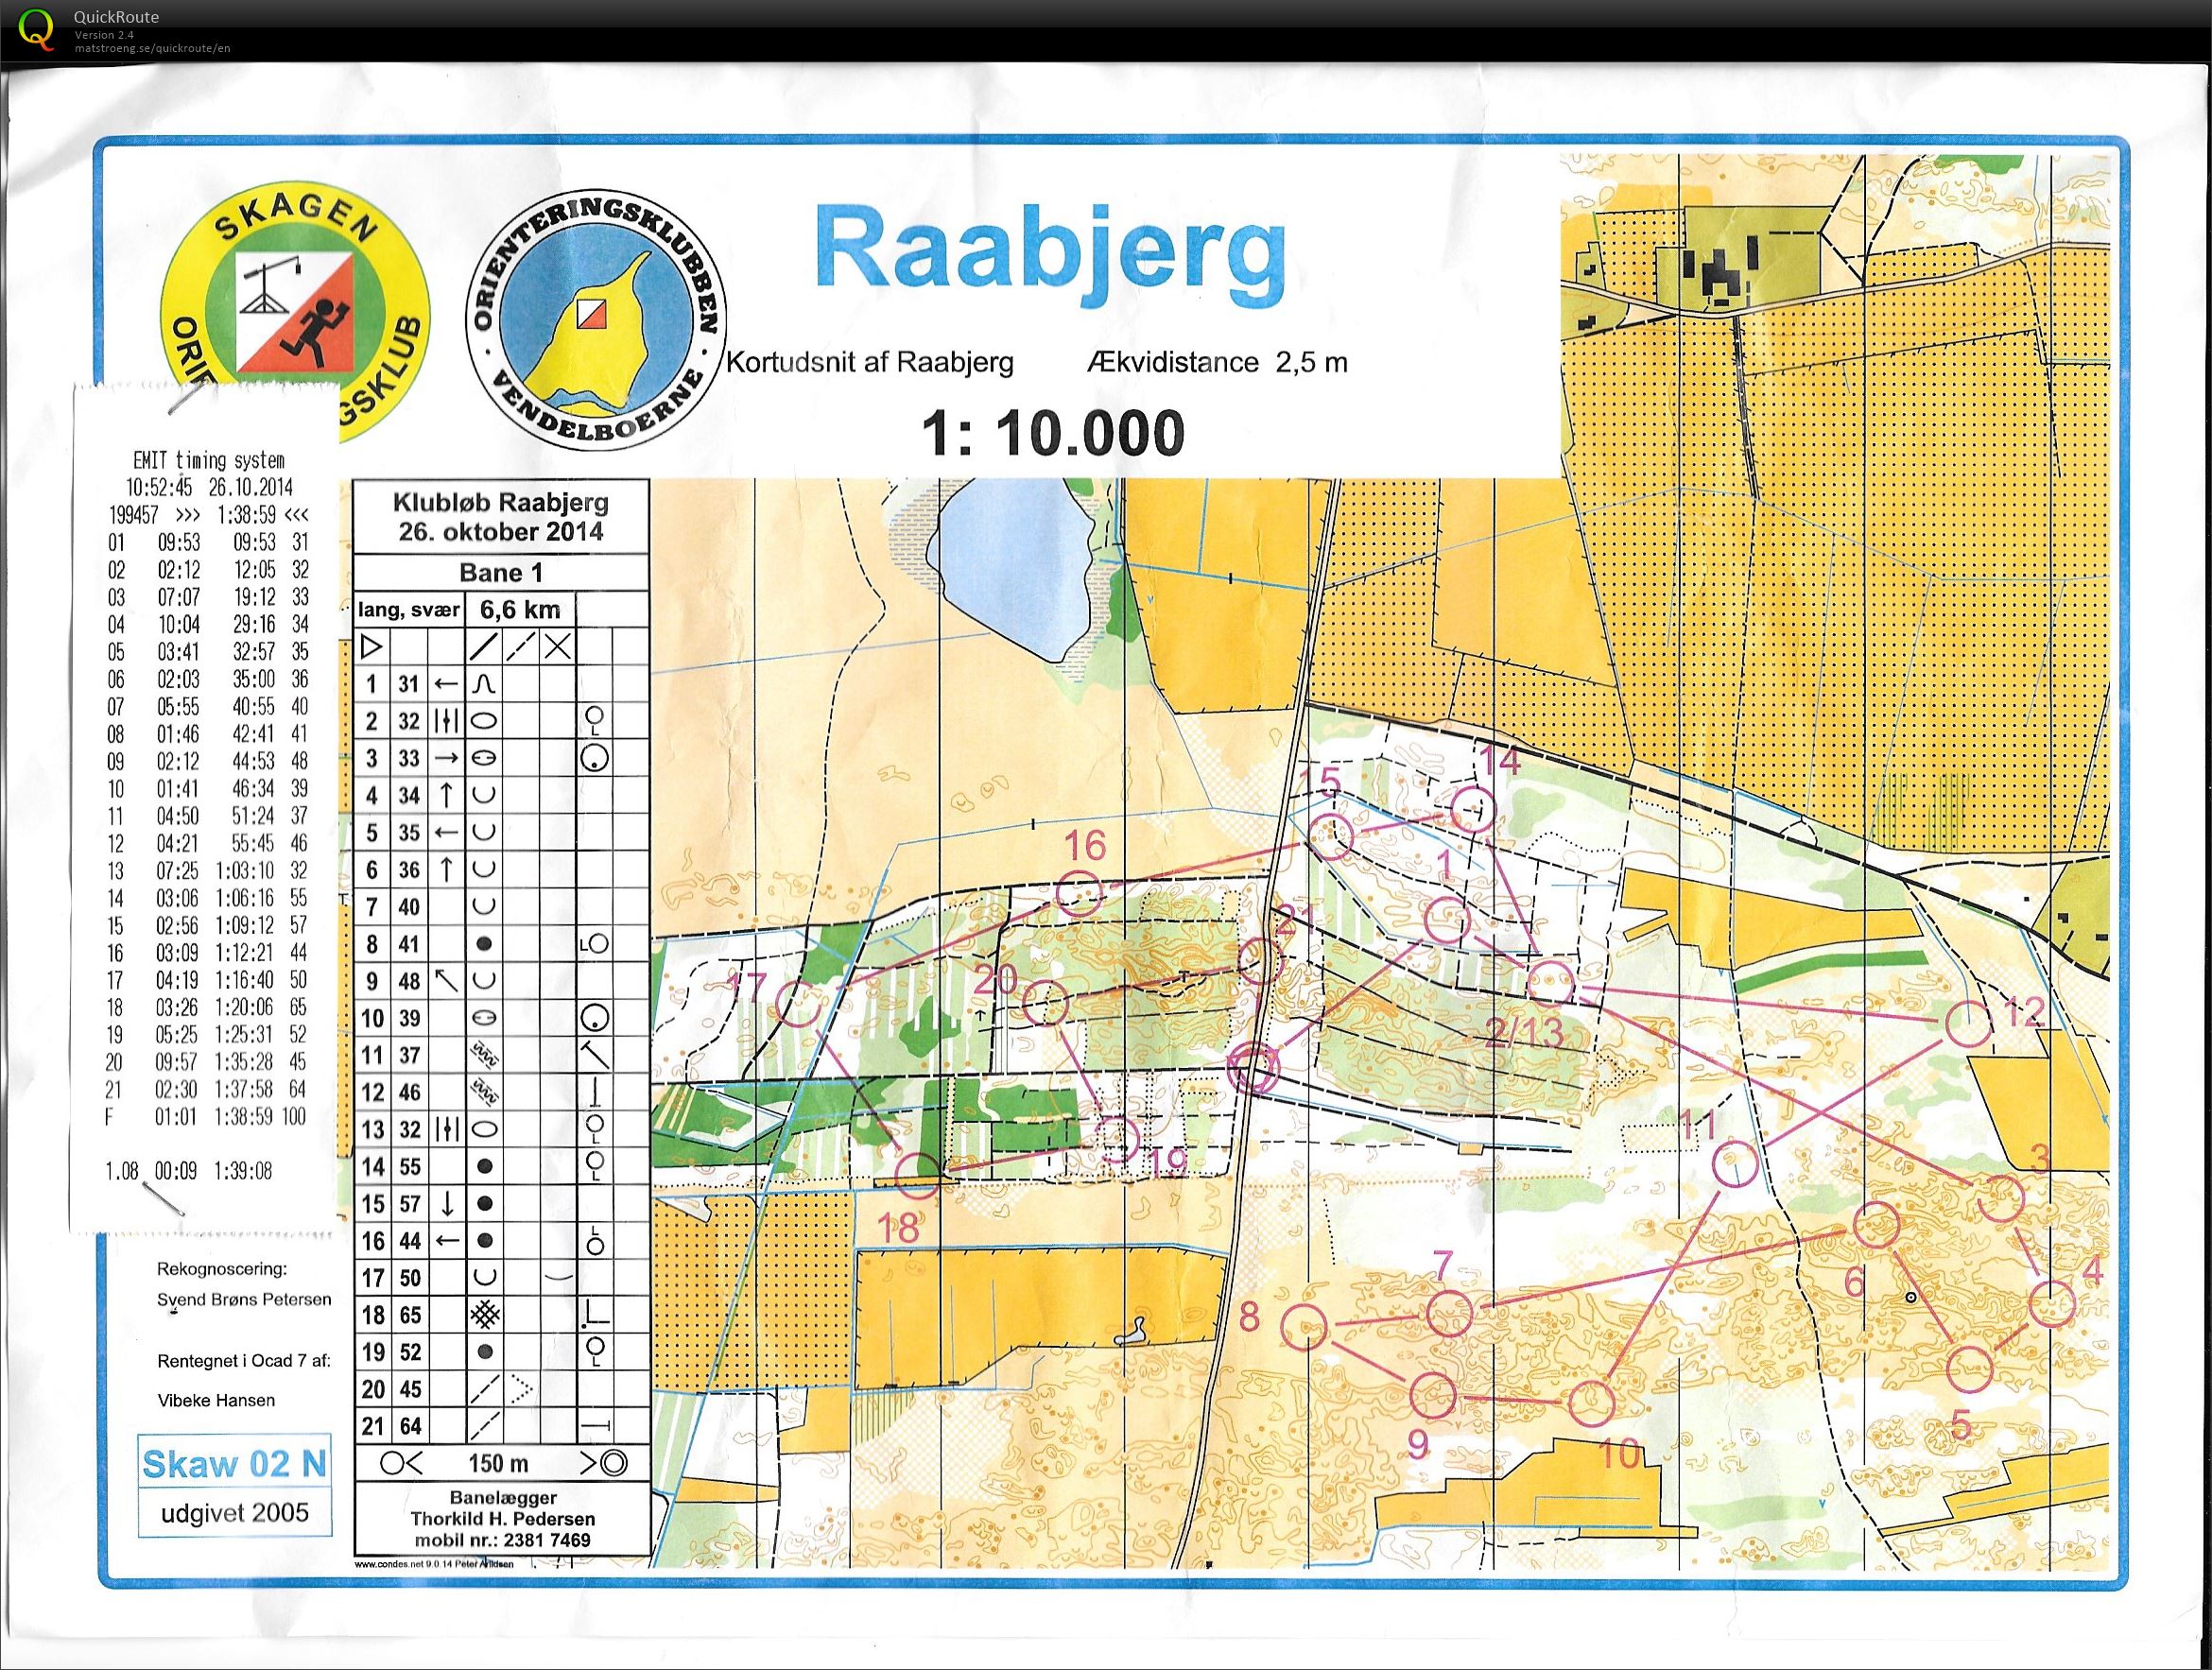 Raabjerg klubløb (26.10.2014)